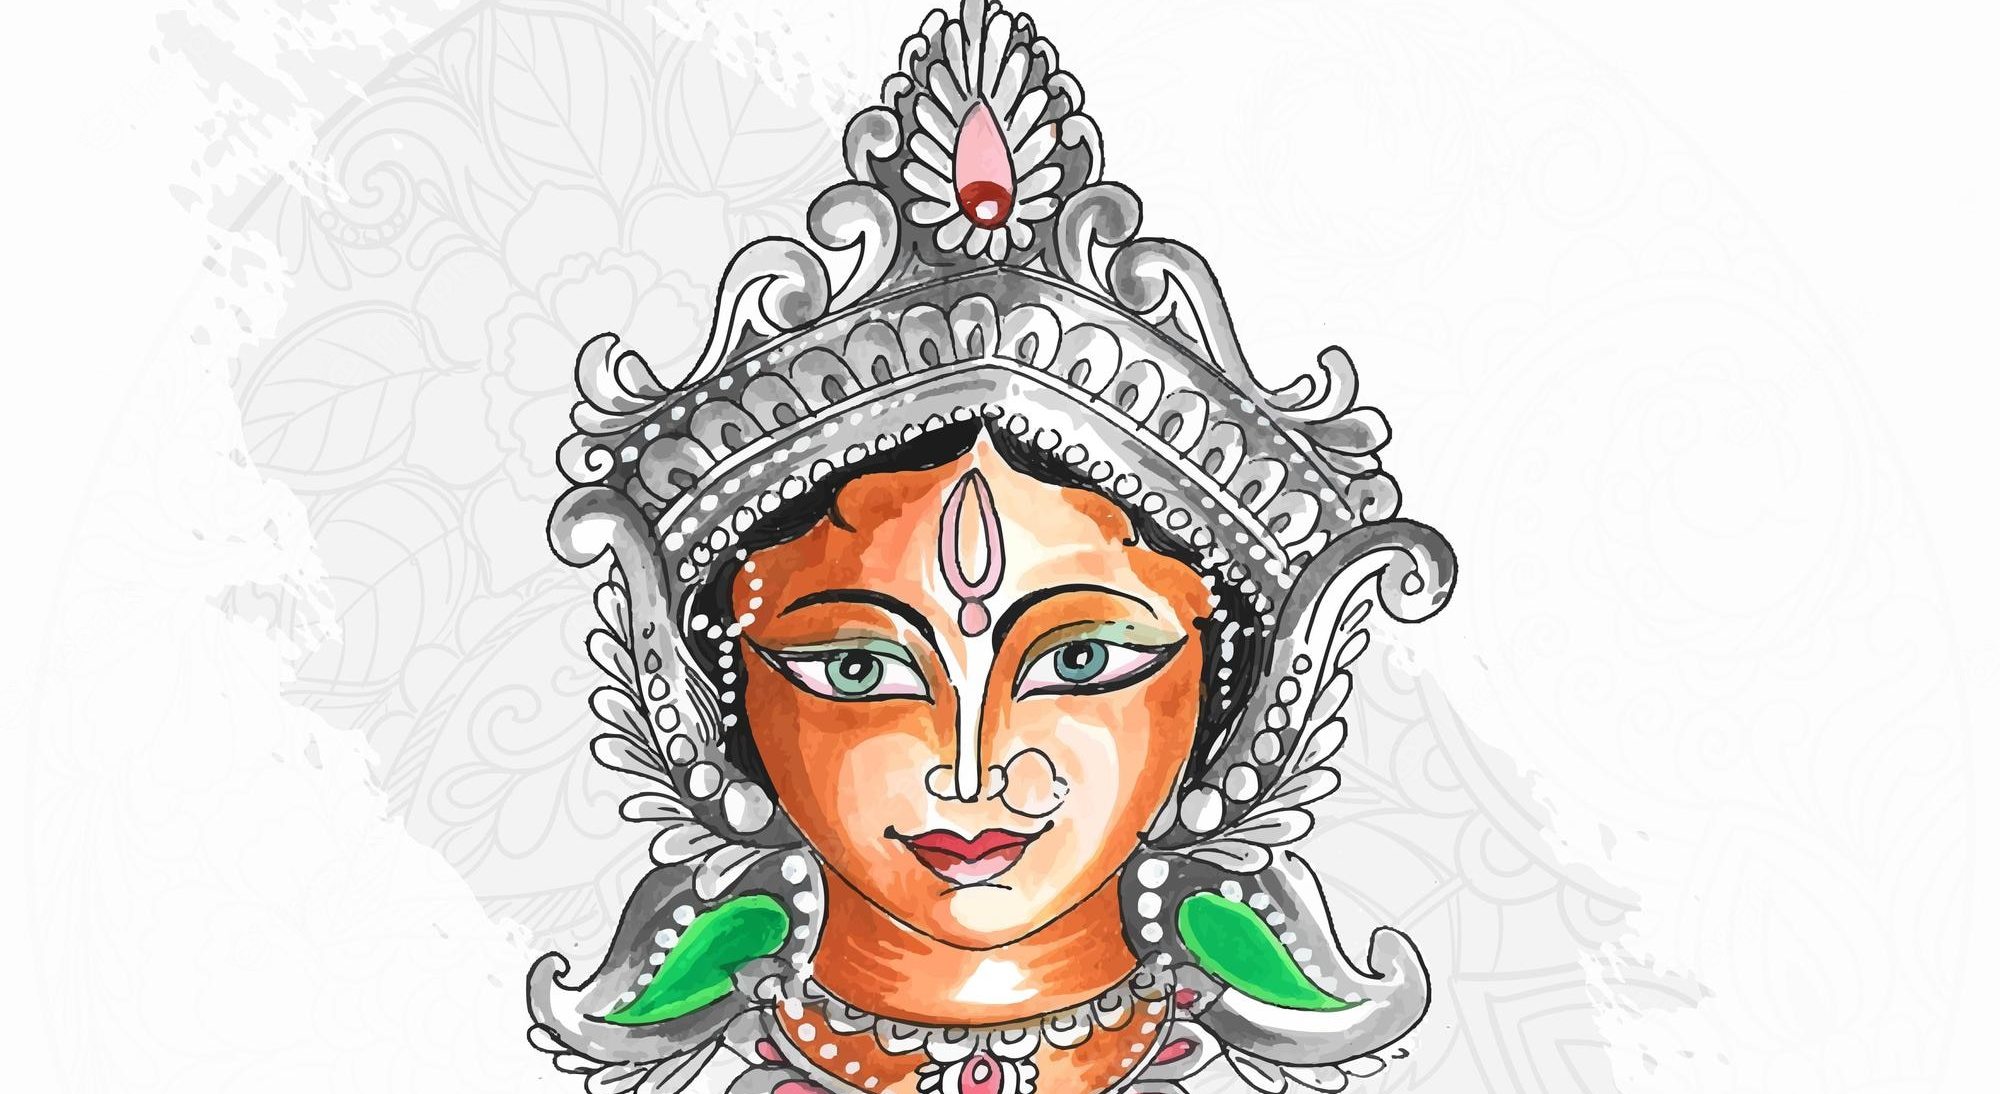 how to draw durga maa face | Durga Puja Drawing for Kids | how to draw durga  maa face | Durga Puja Drawing for Kids how to draw durga maa face, how